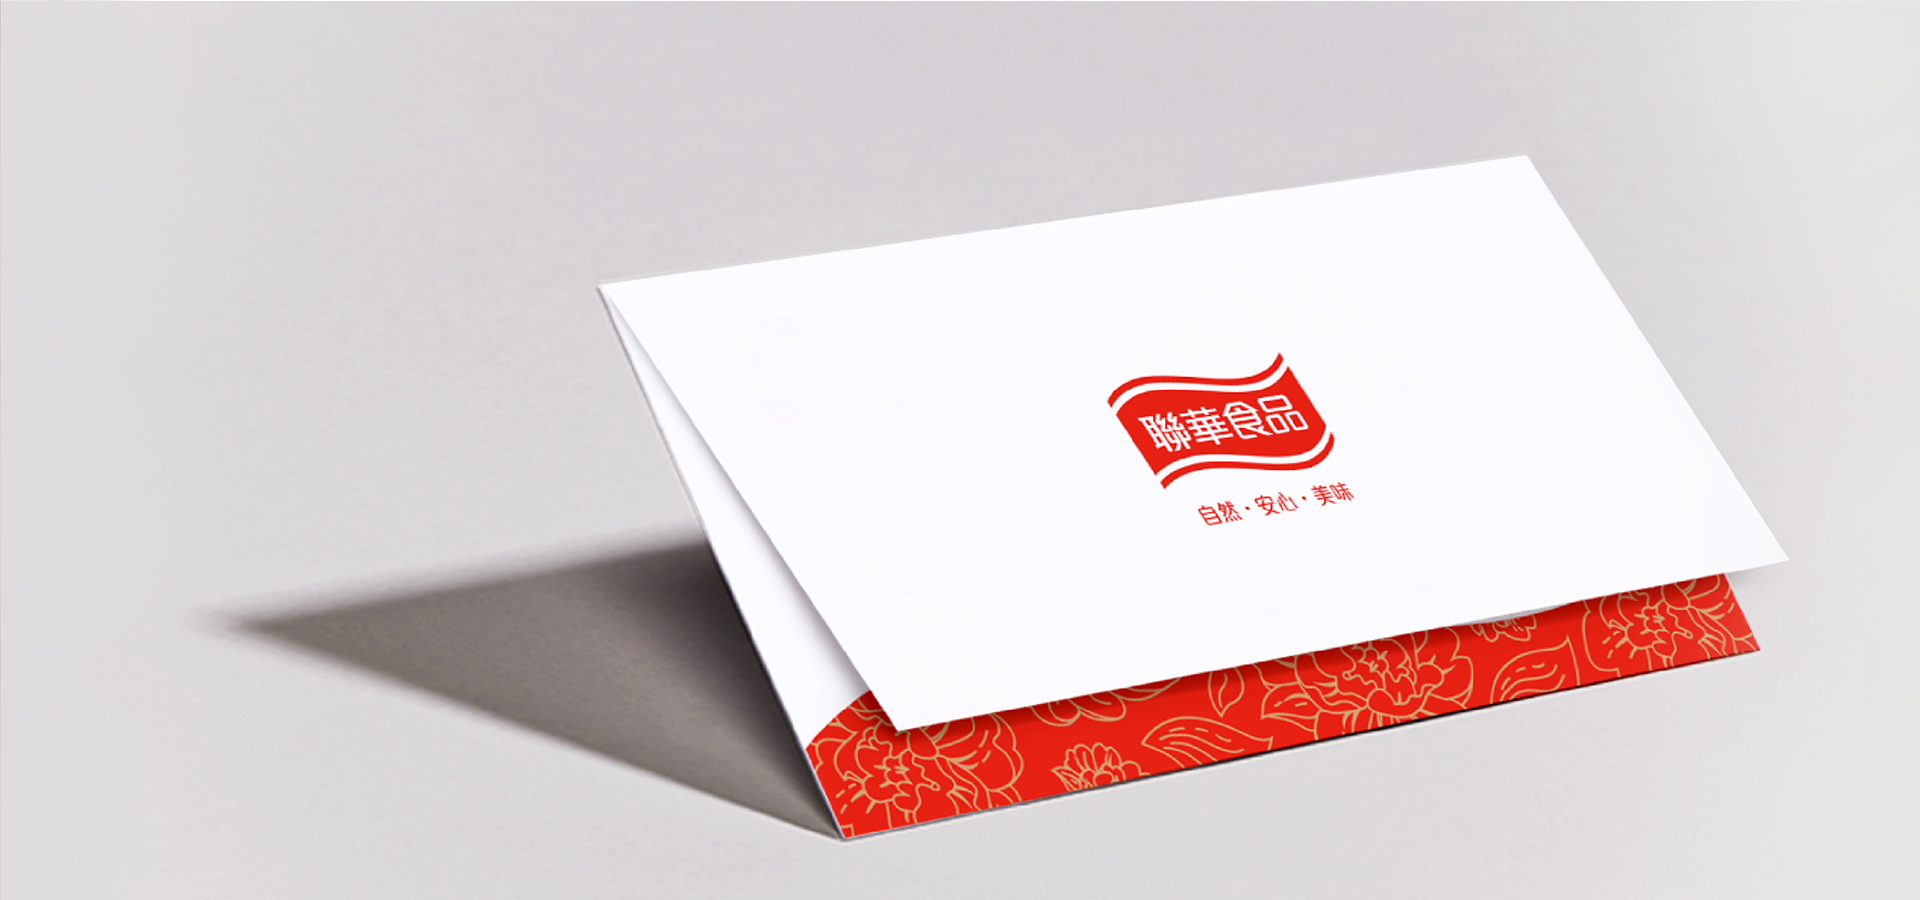 Lian Hwa slide06 | 聯華食品企業識別形象更新專案 | Labsology 法博思品牌顧問公司